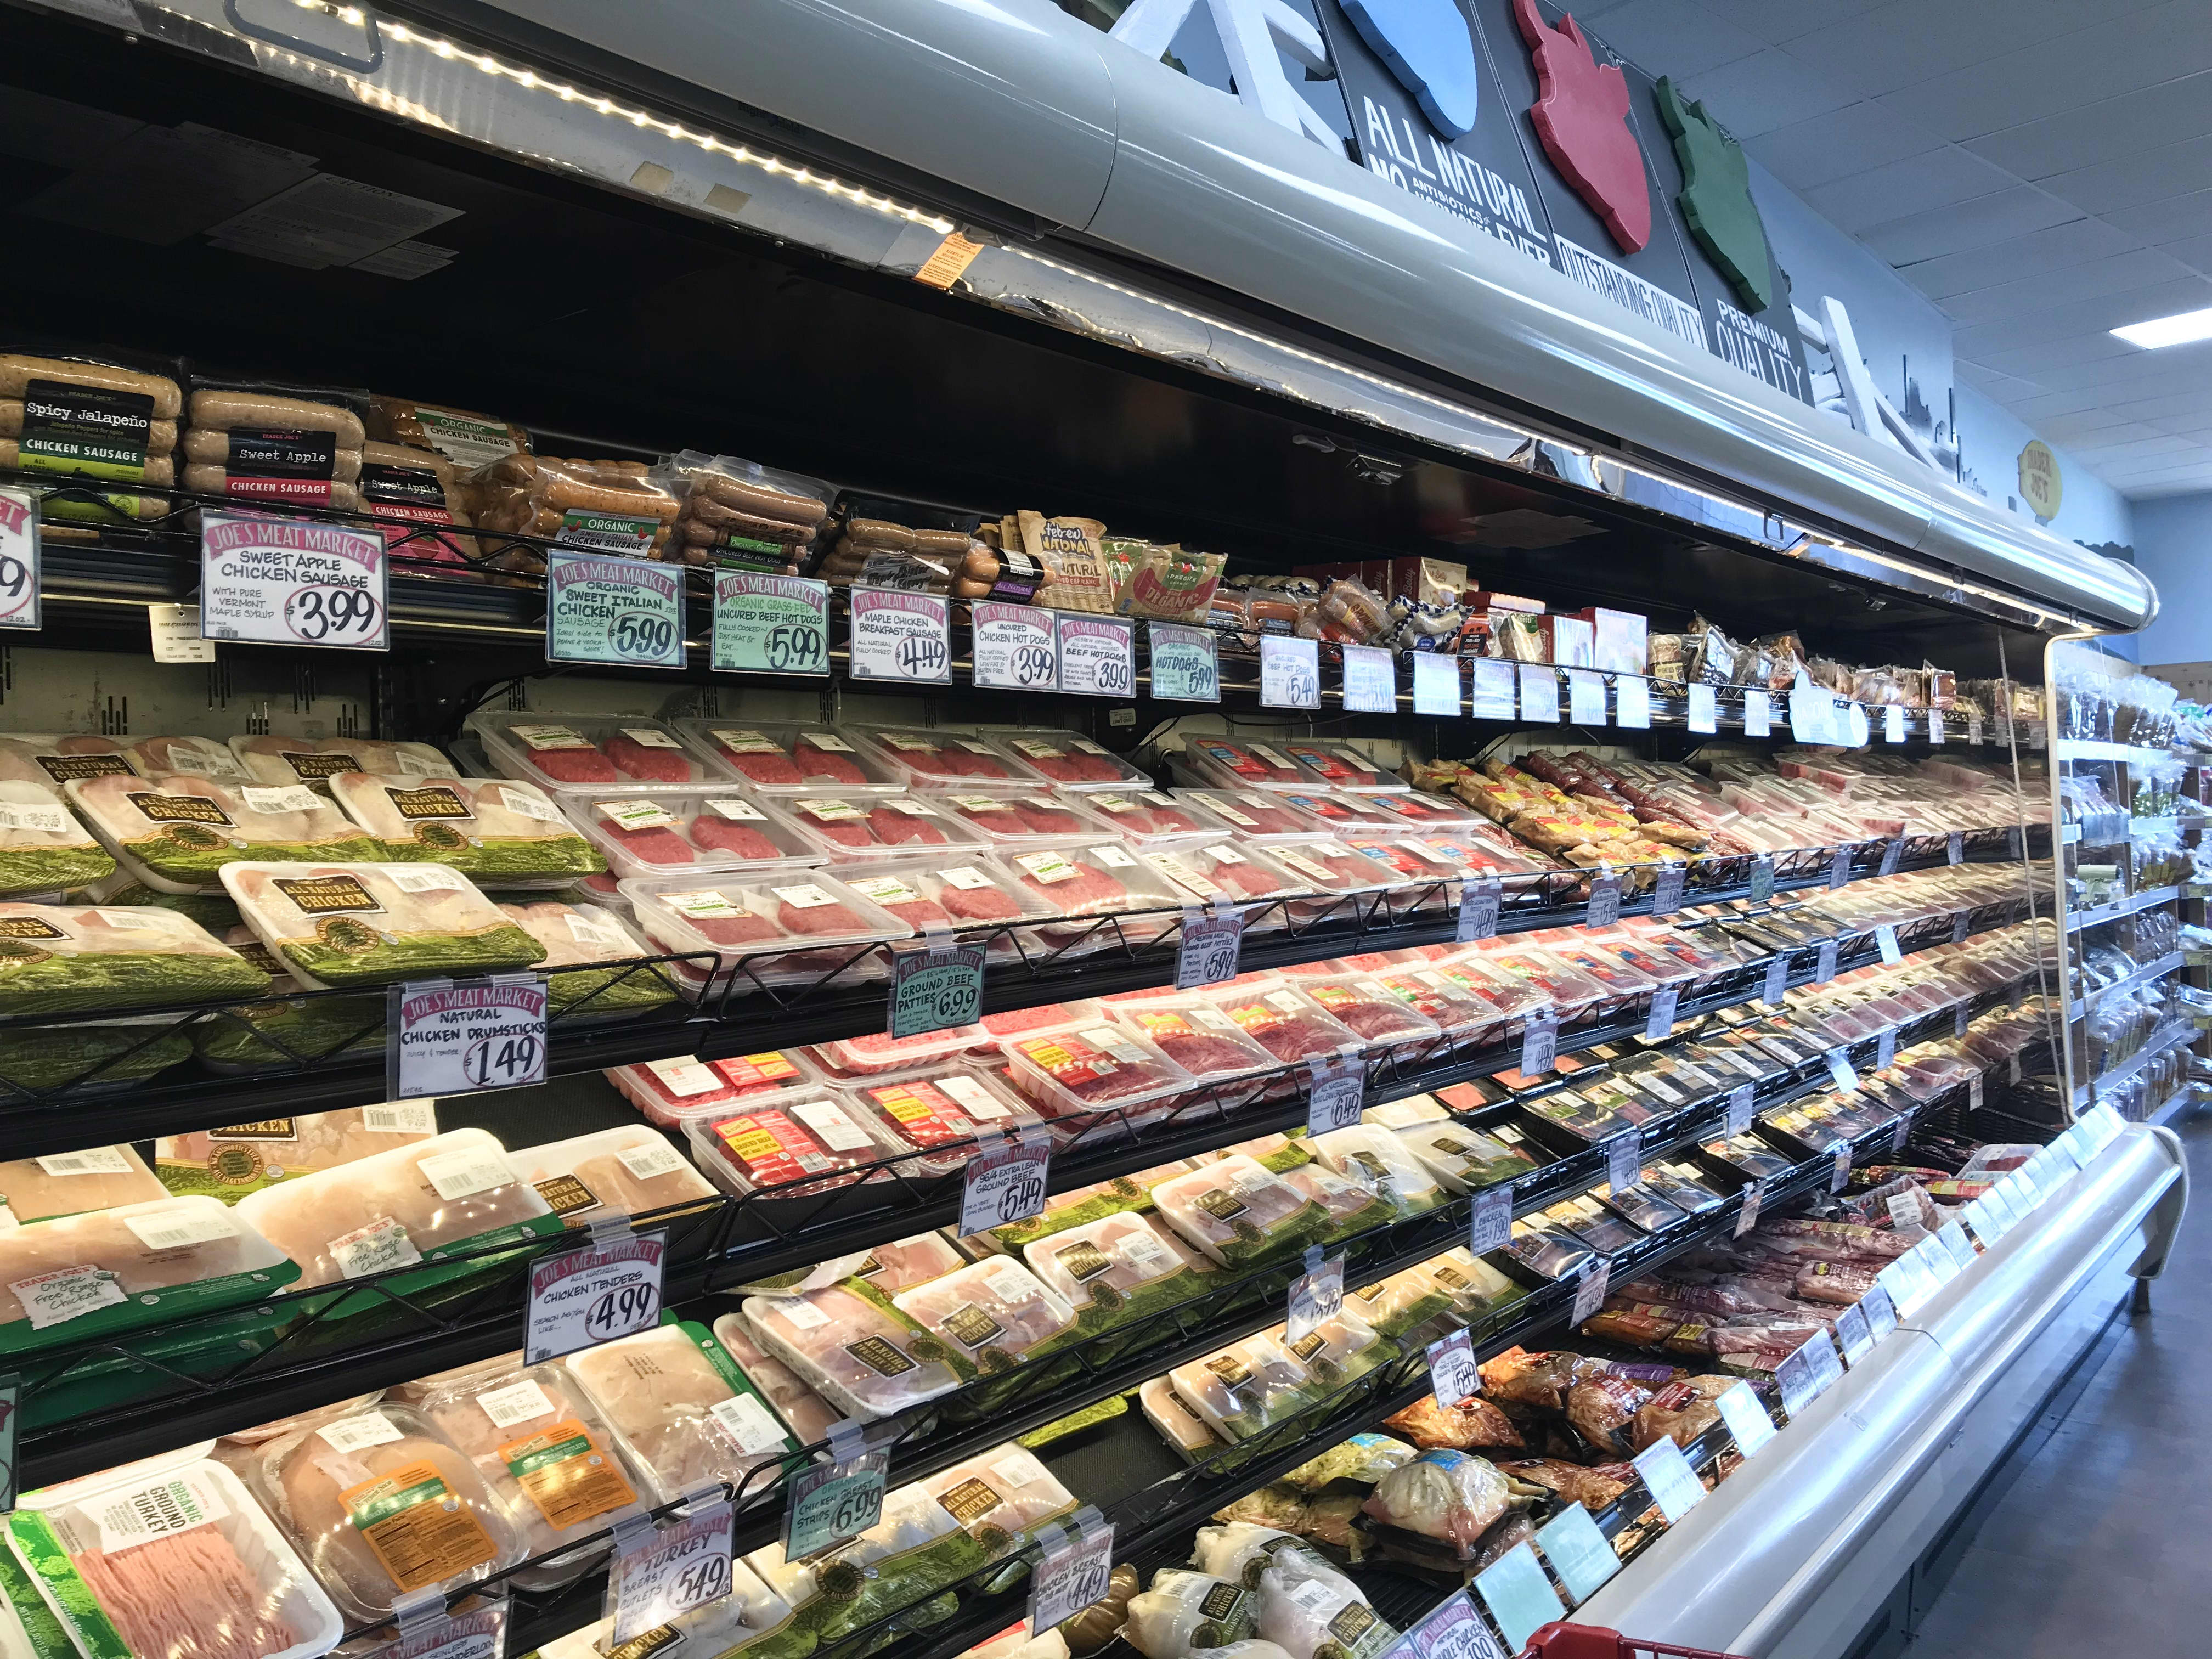 Frozen Food & Groceries - Pay Less Super Markets